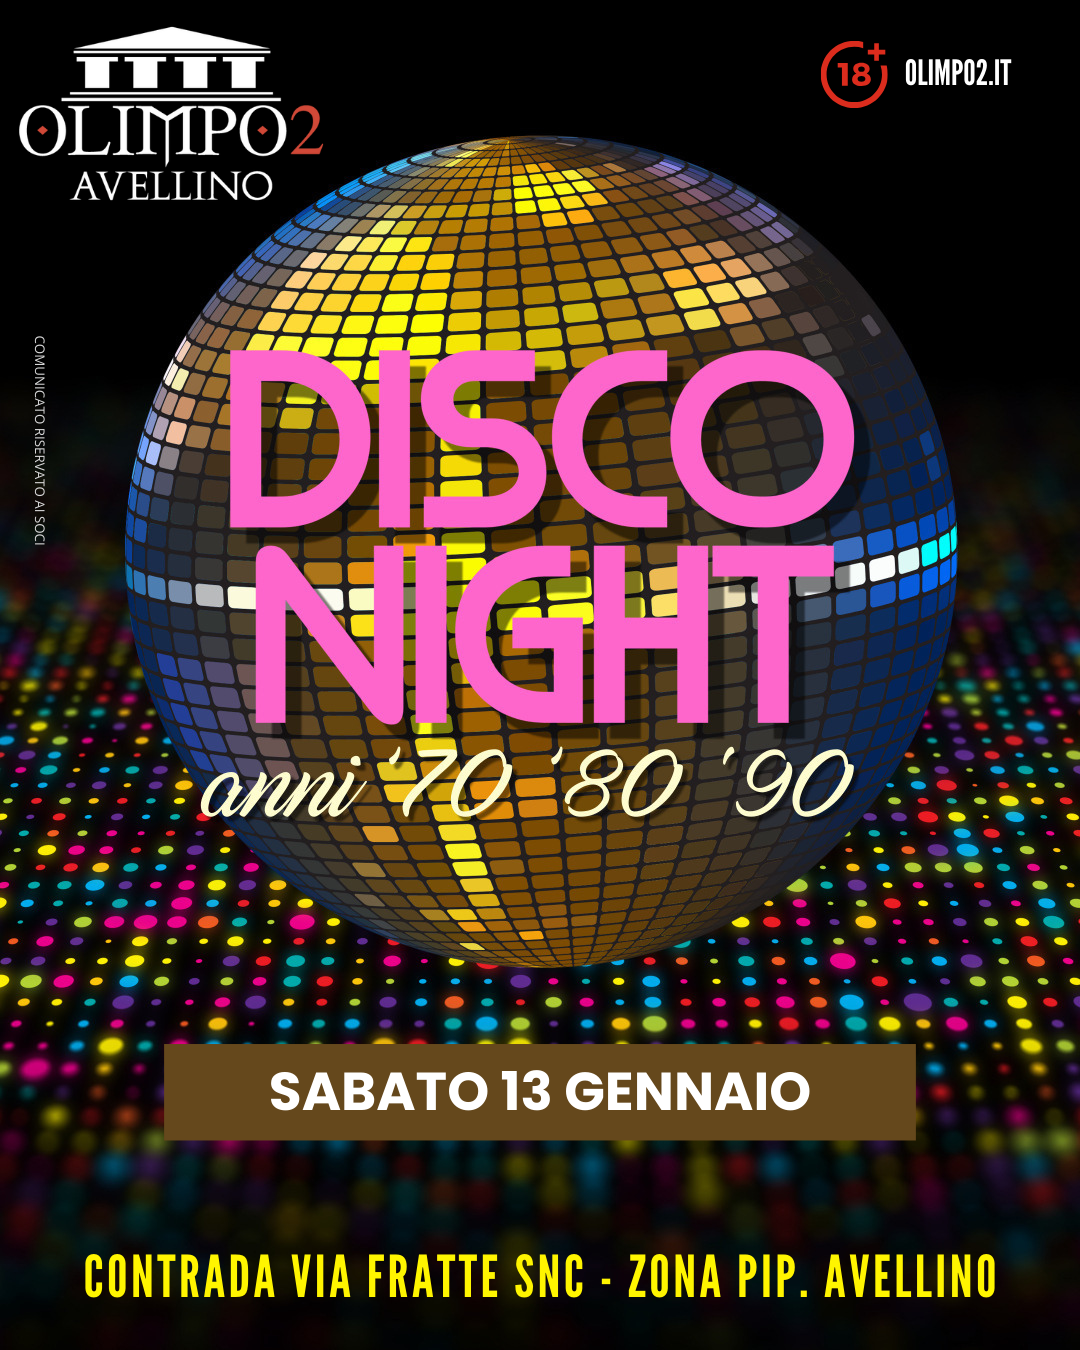 disco night olimpo 2 avellino